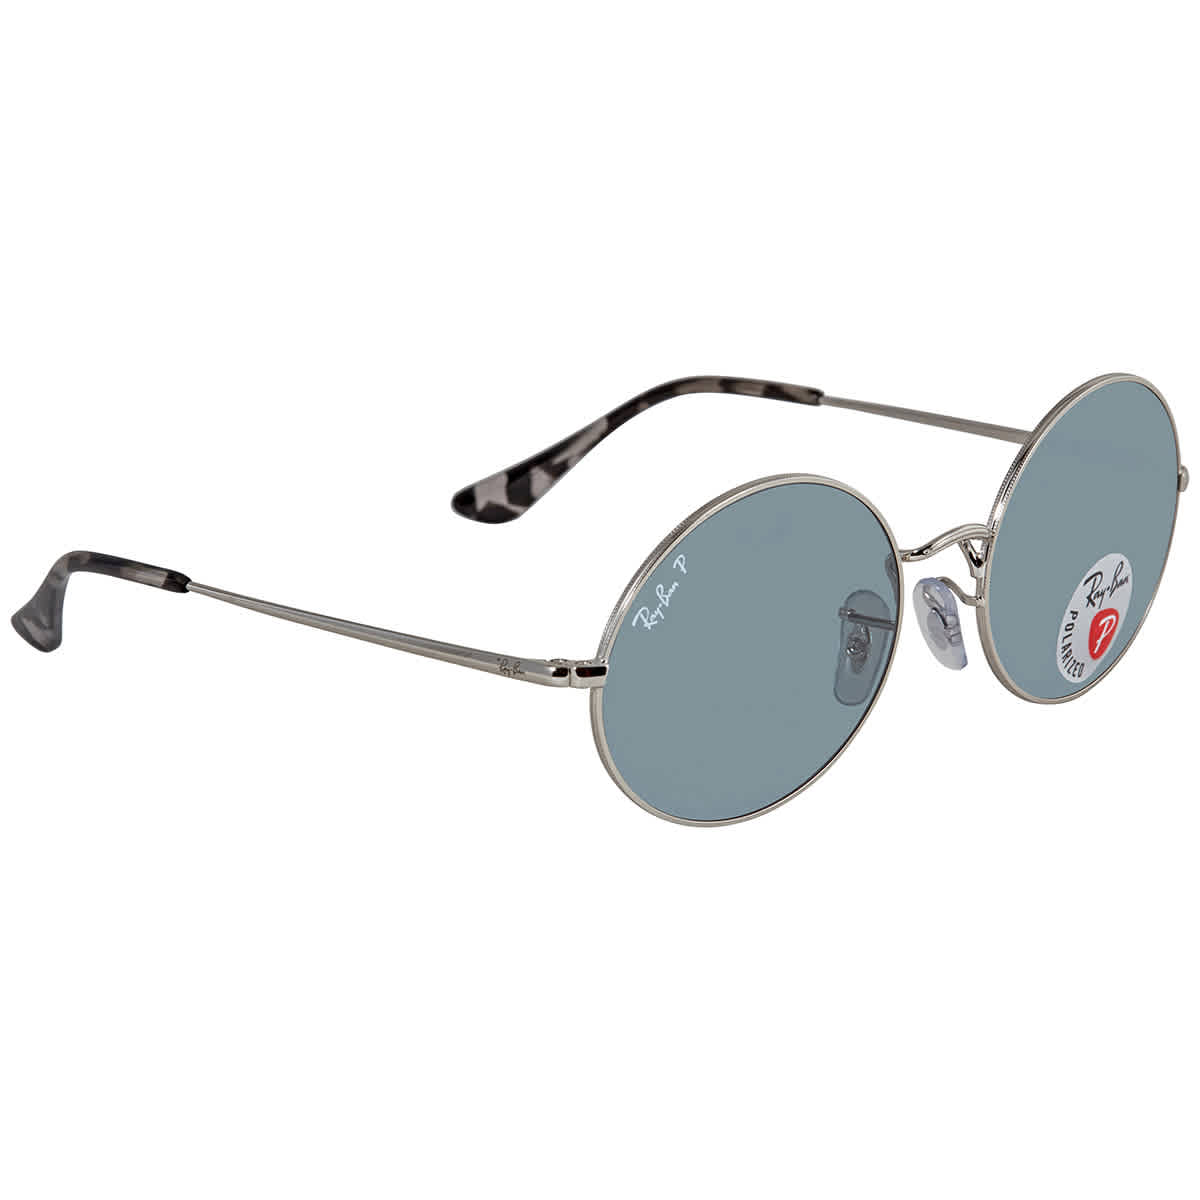 Ray Ban Oval 1970 Polarized Unisex Blue Round Sunglasses Rb1970 9149s2 54 Ebay